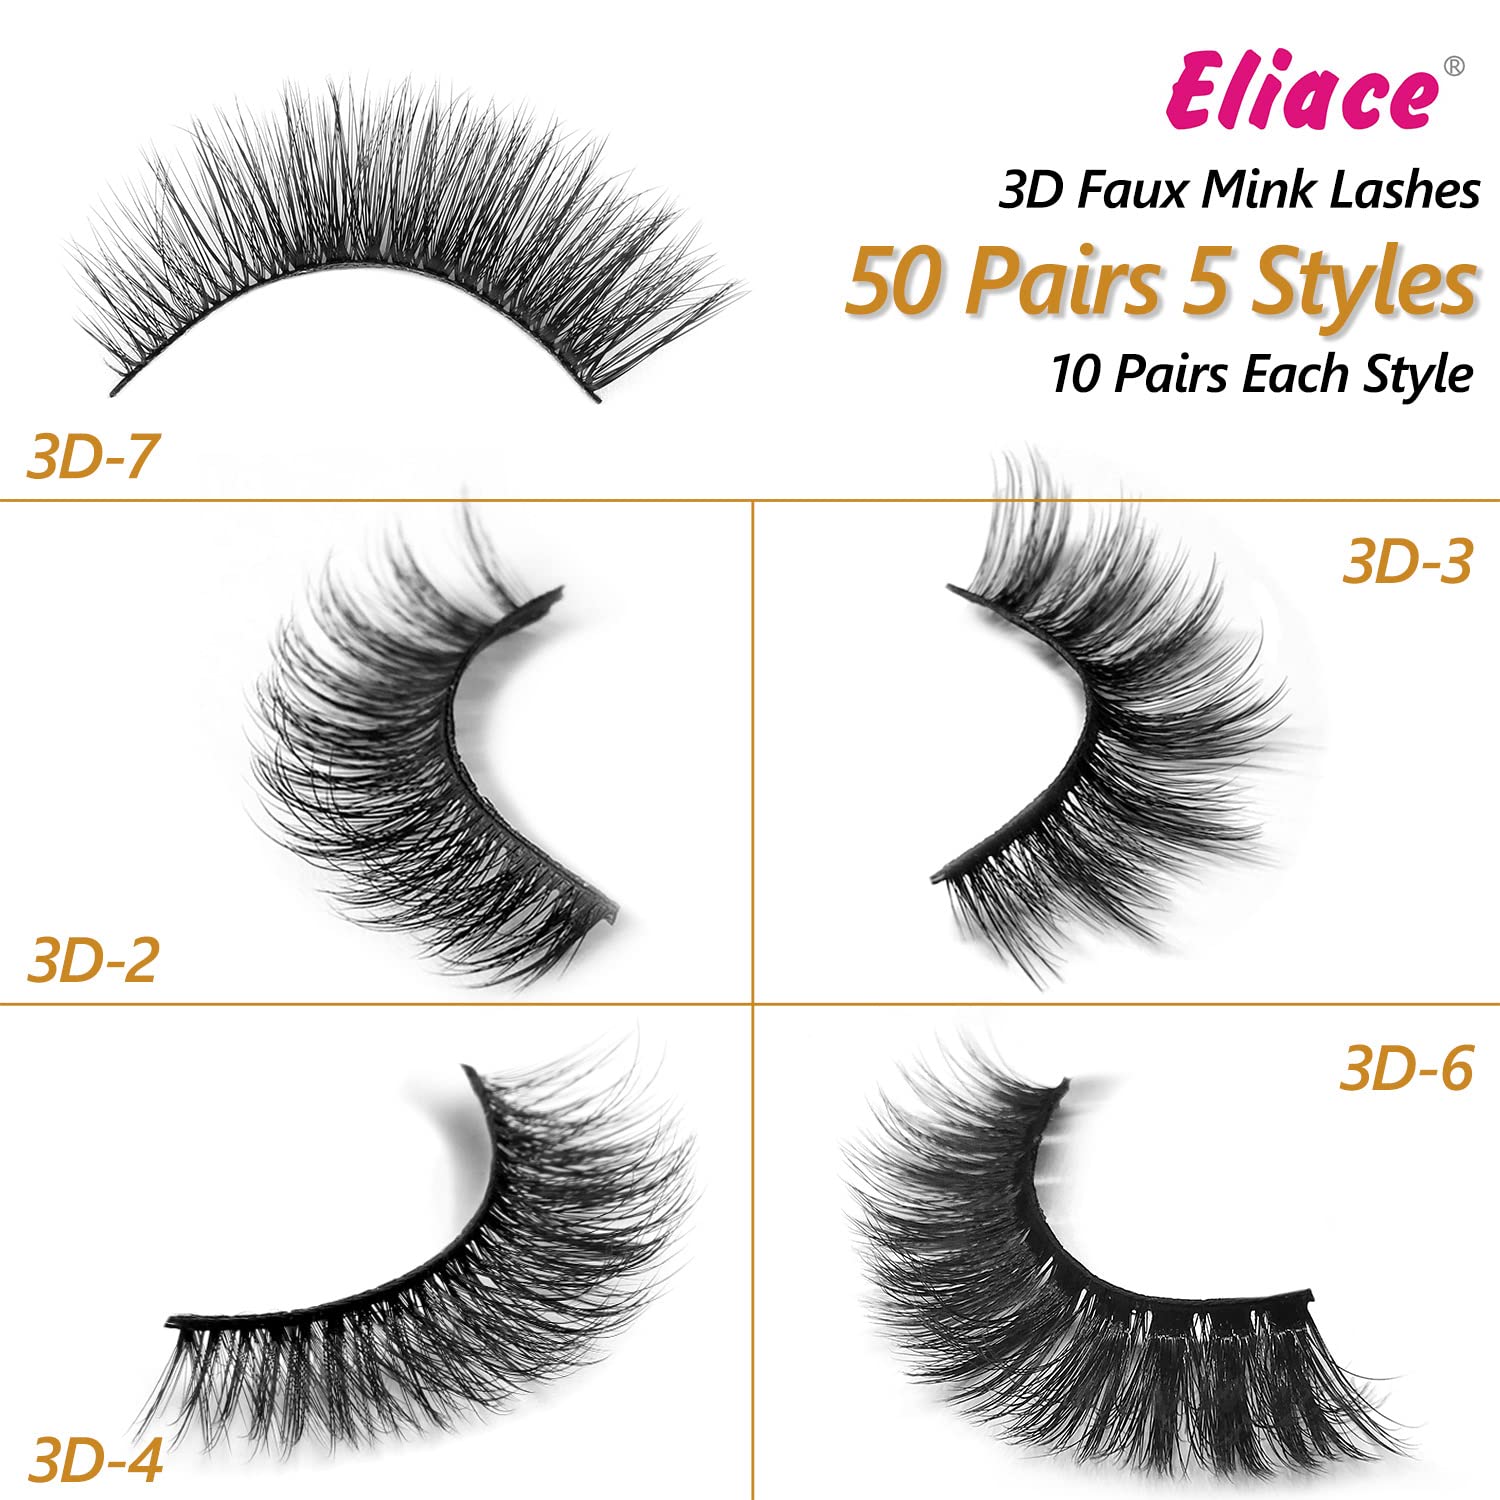 Eliace Eyelashes, 50 Pairs 5 Styles 3D Faux Mink Lashes Natural Look Wispy Fluffy Handmade Cat False Eyelashes Set Professional Fake Eyelashes Pack